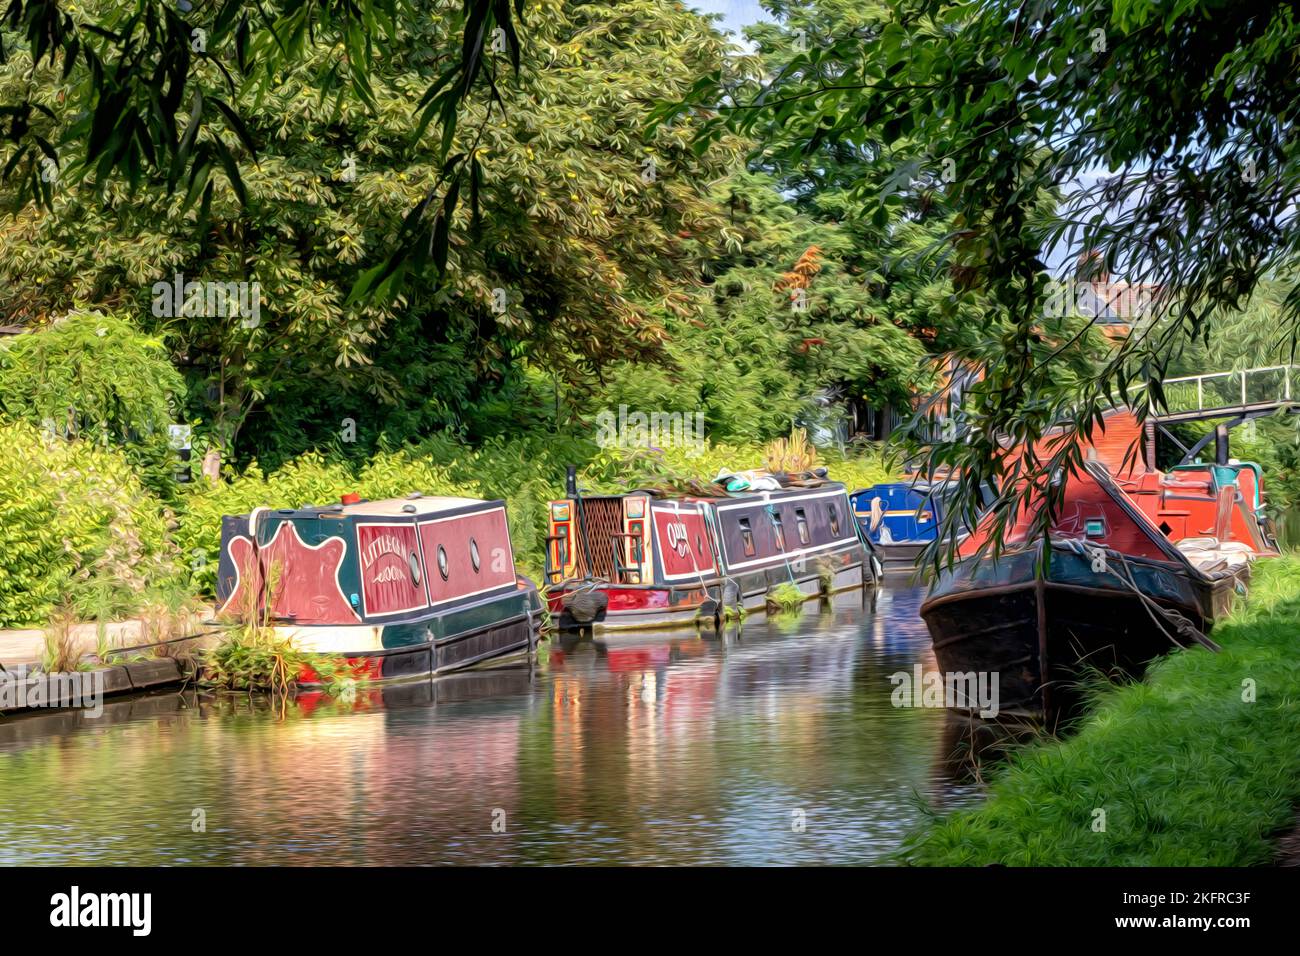 Narrowboats on the Grand Union Canal, Aylesbury, Buckinghamshirem Inglaterra - Pintura al óleo digital Foto de stock